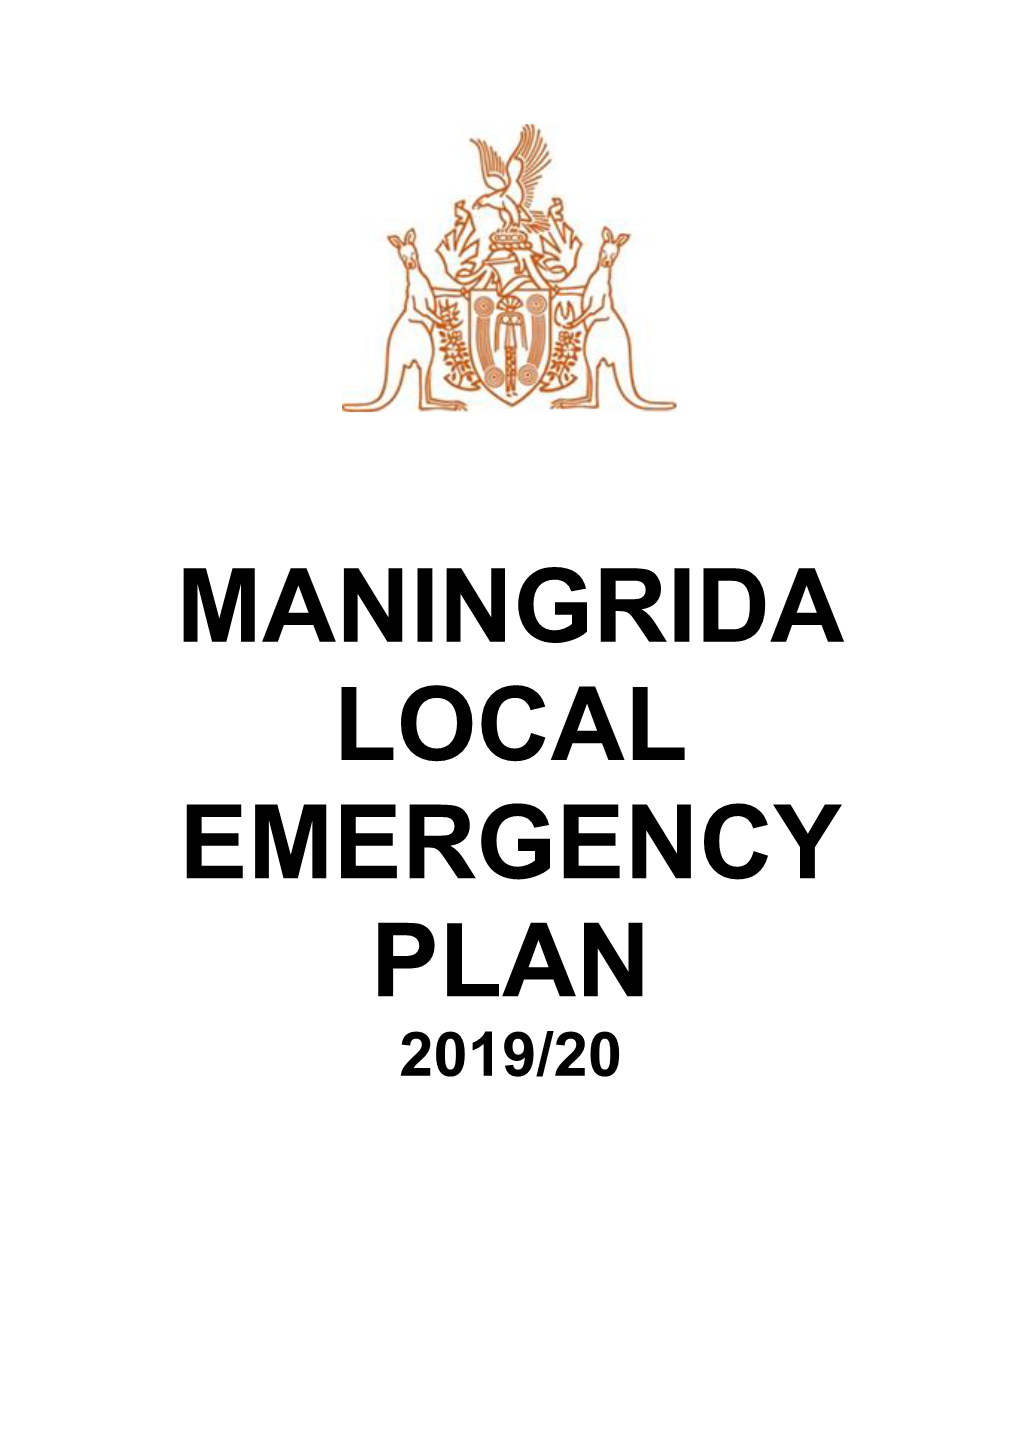 Maningrida Local Emergency Plan 2019/20